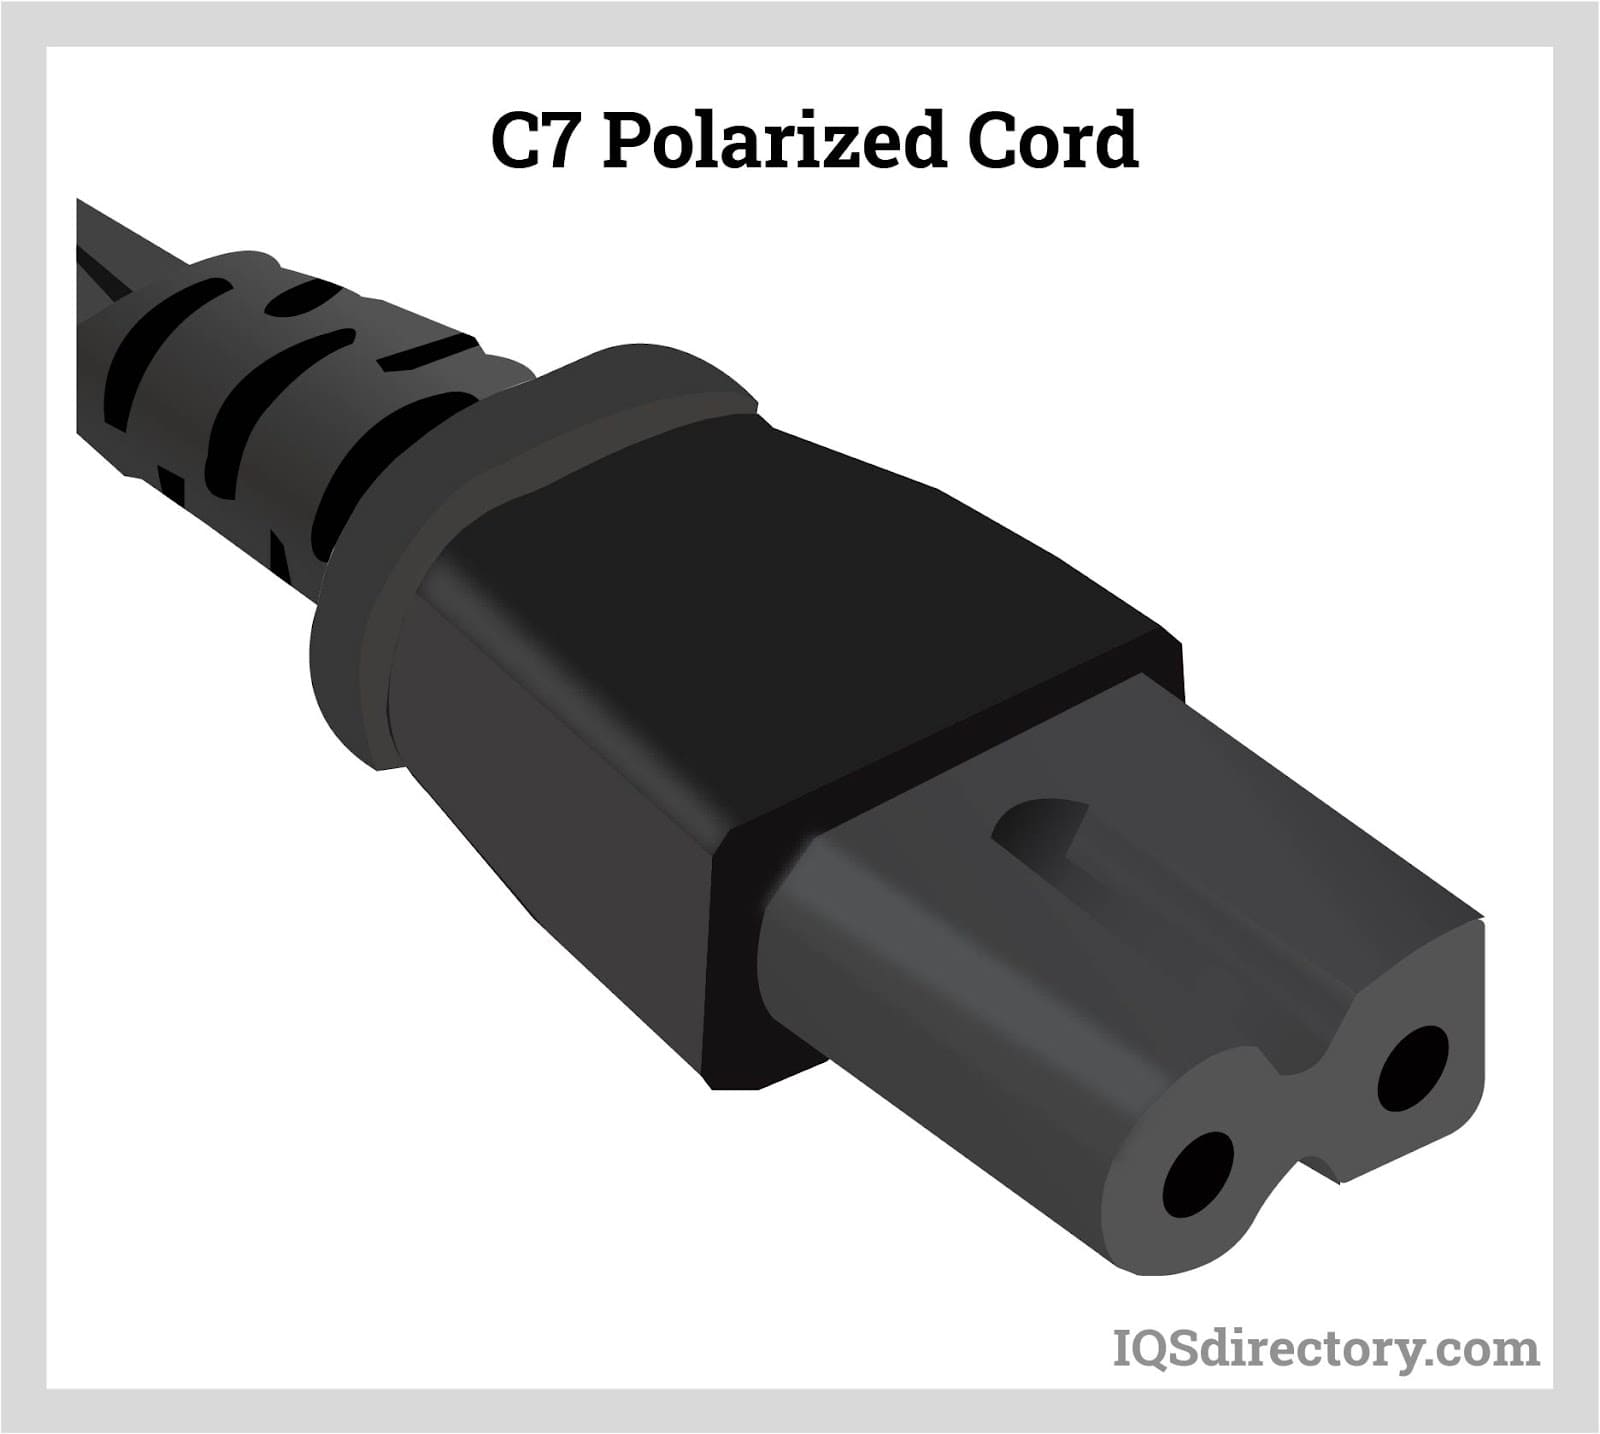 C7 Polarized Cord